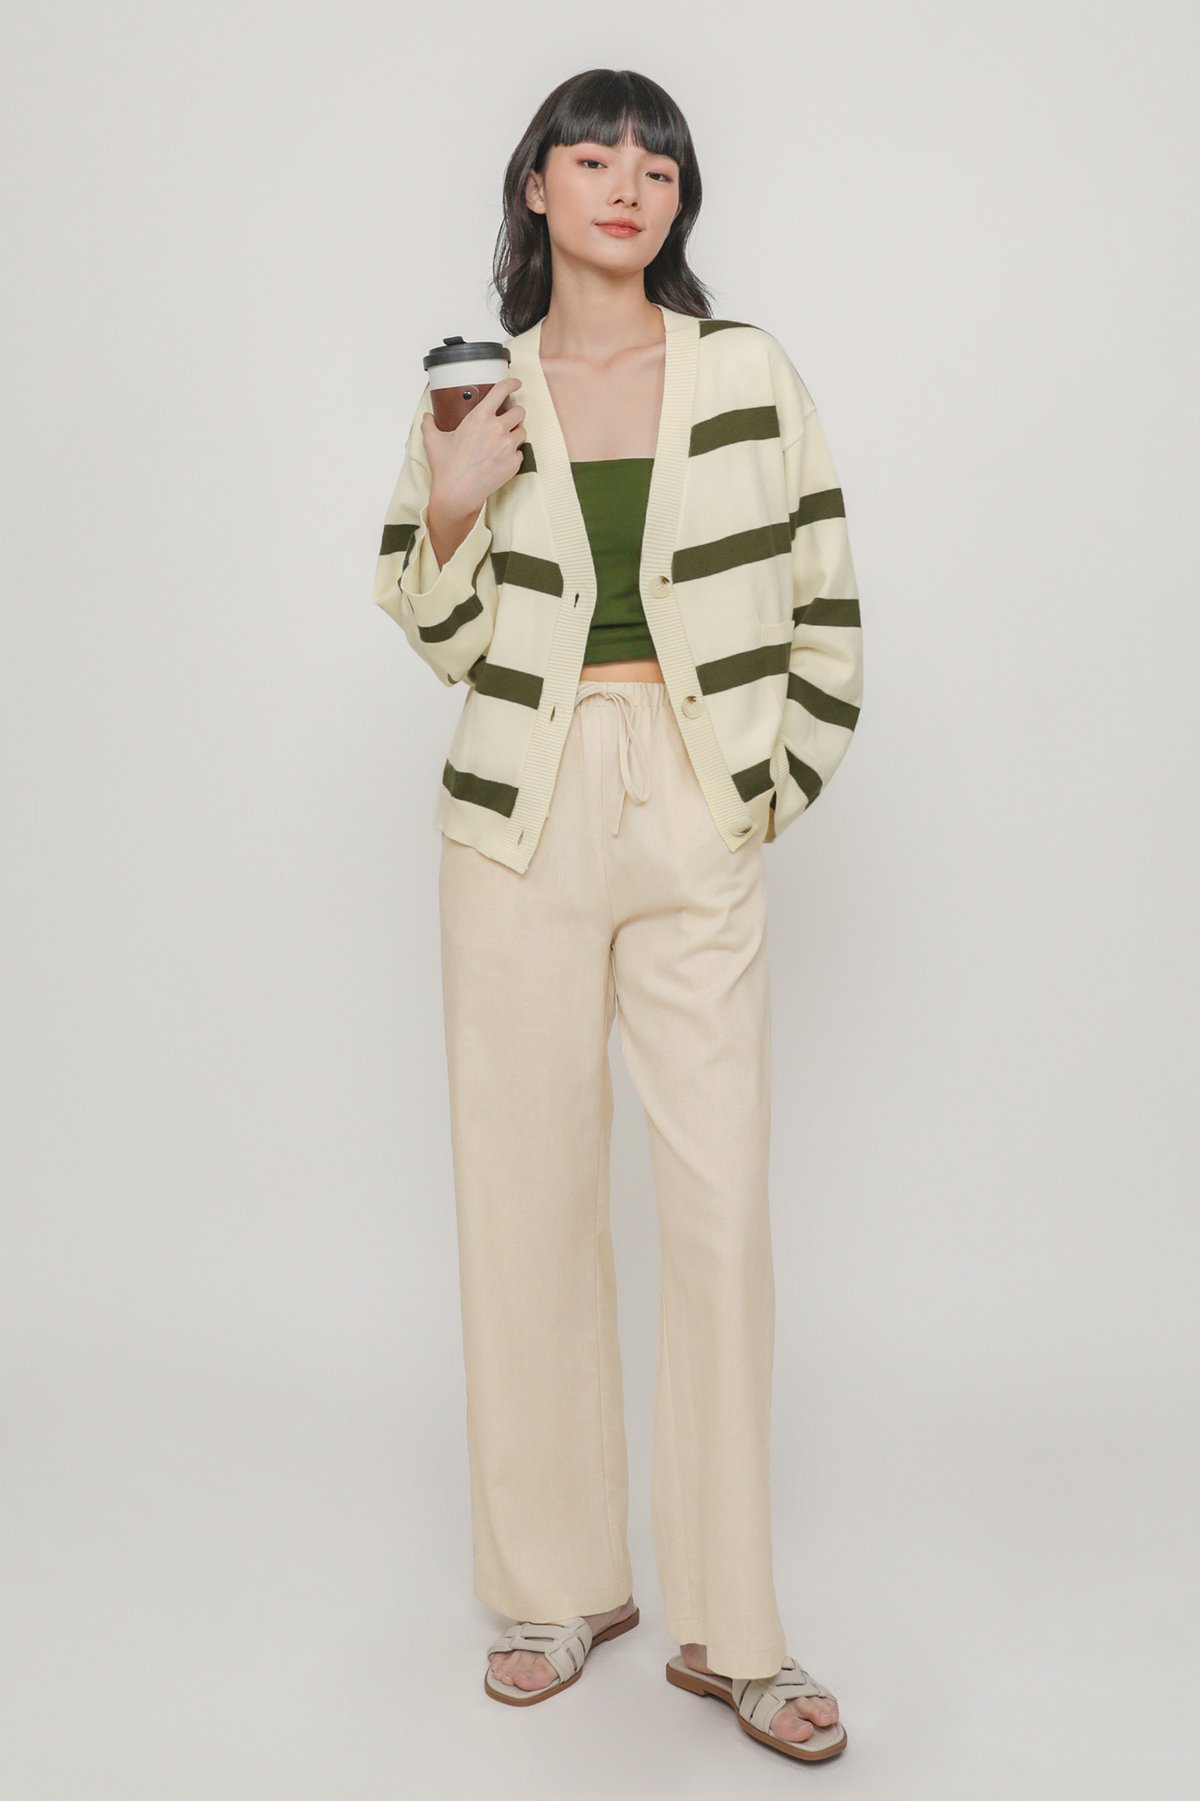 Kathy Wide Sleeve Knit Cardigan (Cream/Olive)